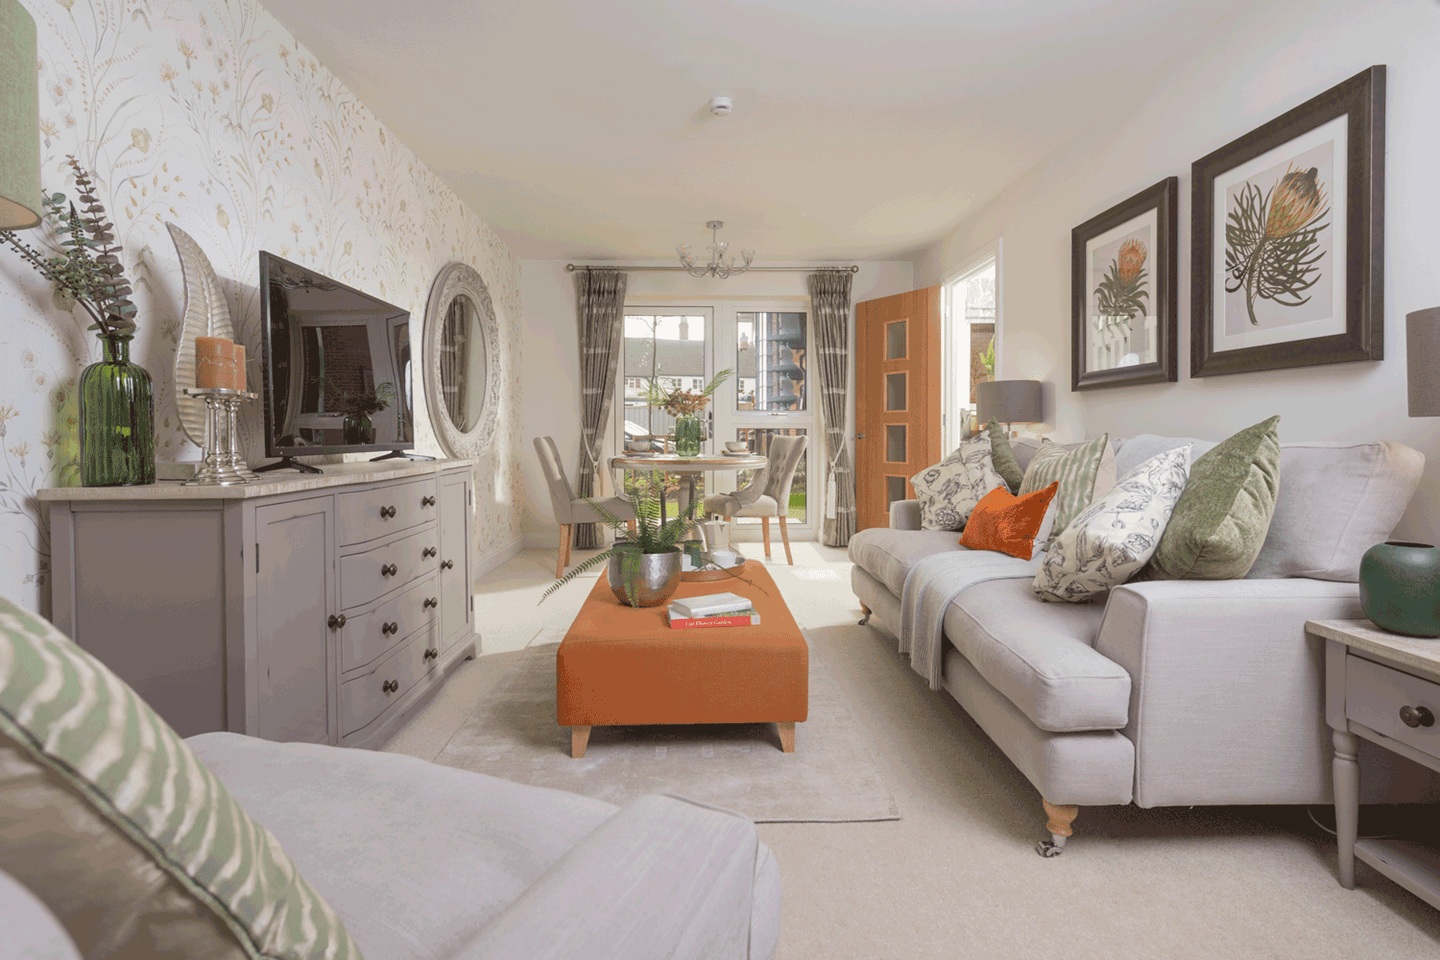 Living Room at Scott Place Retirement Development in Ripon, Harrogate